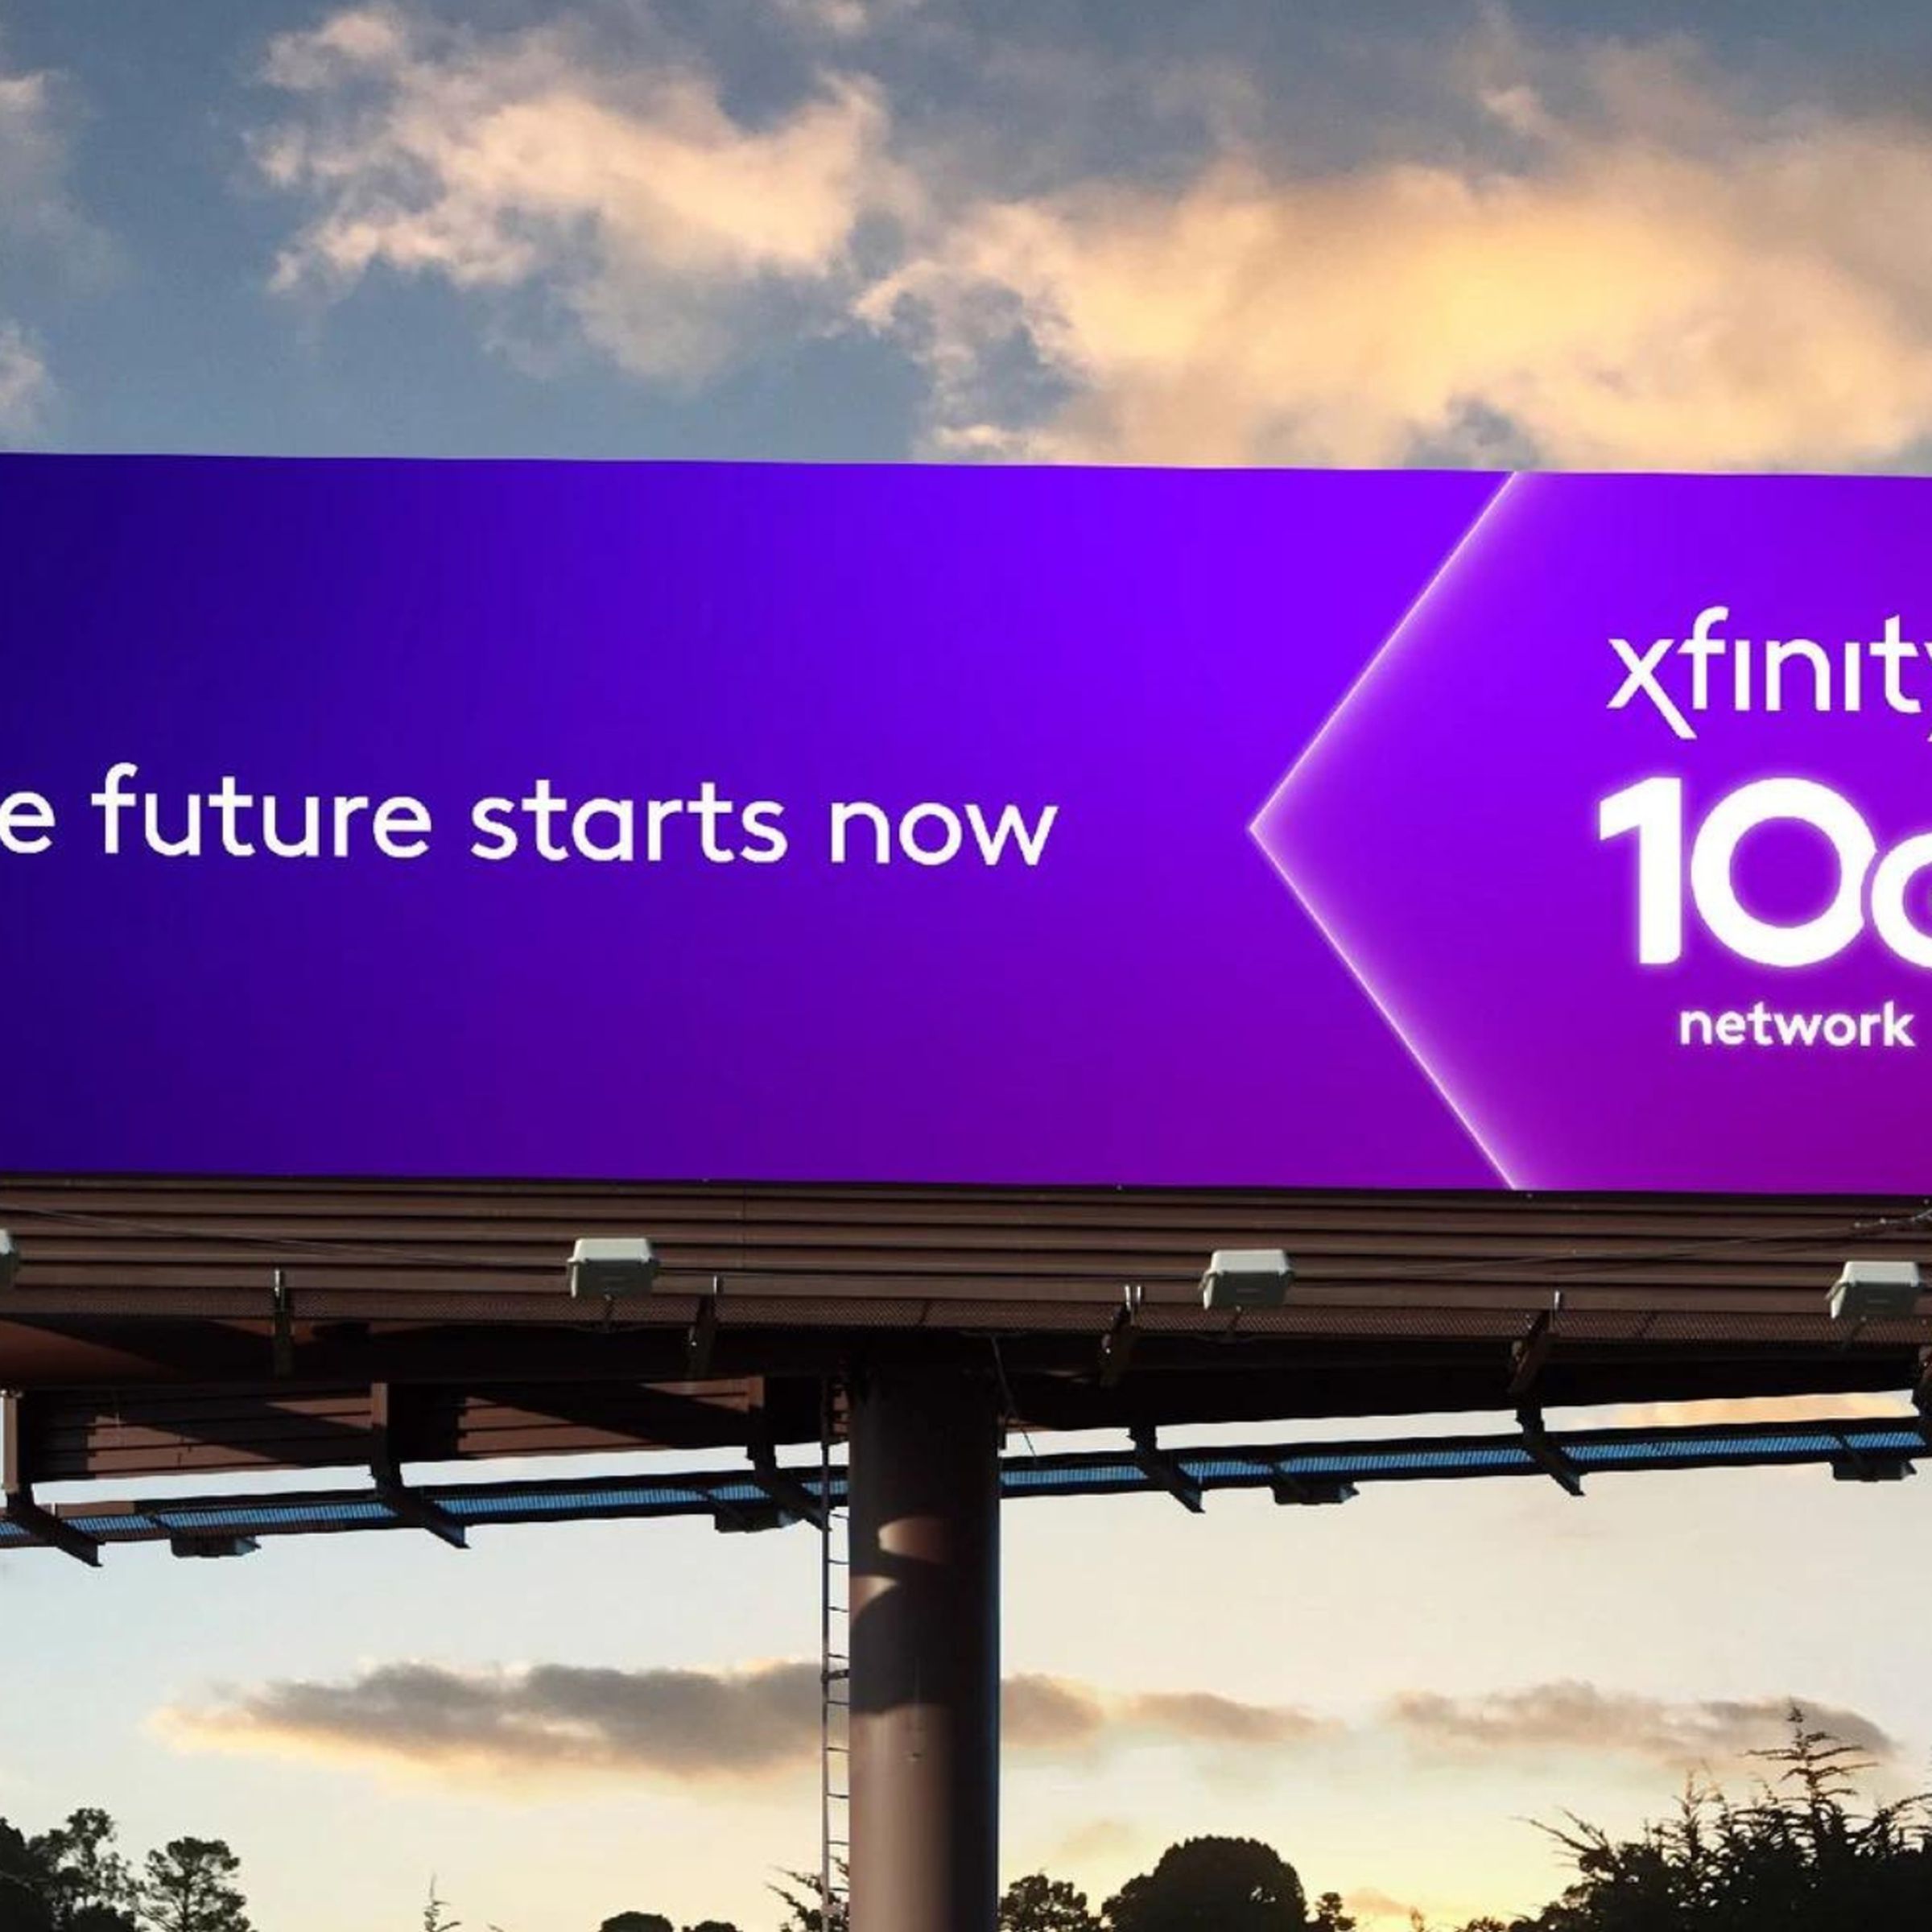 A billboard advertising Comcast’s Xfinity 10G network.